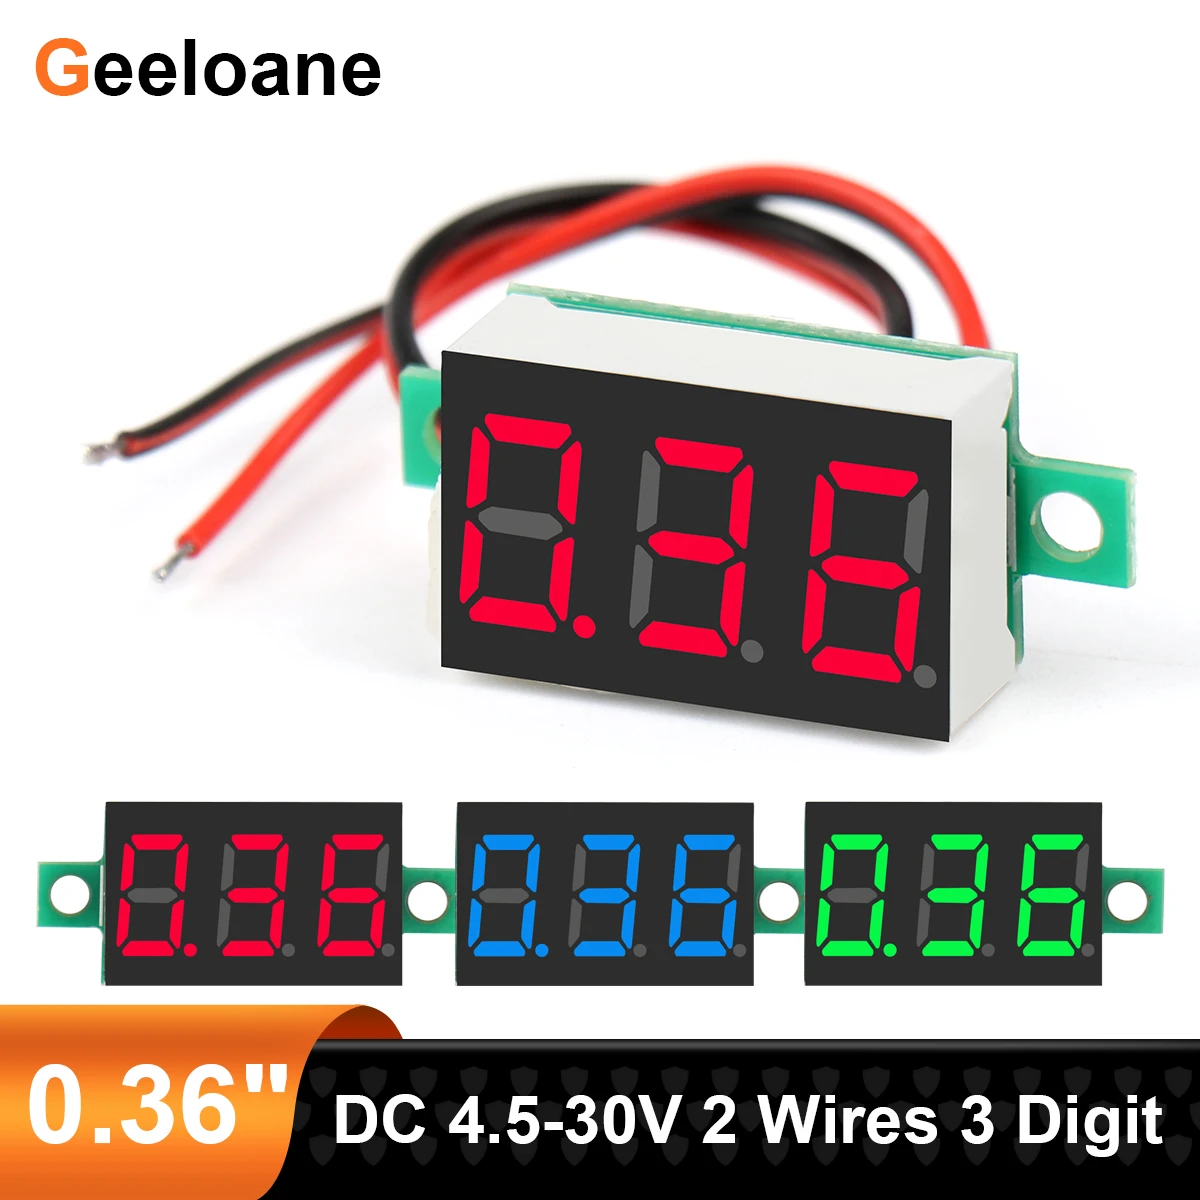 

0.36" Mini LED Digital Voltmeter DC 4.5-30V 2 Wires 3 Digit Voltage Panel Meter Display Meter DIY Reverse Polarity Protection